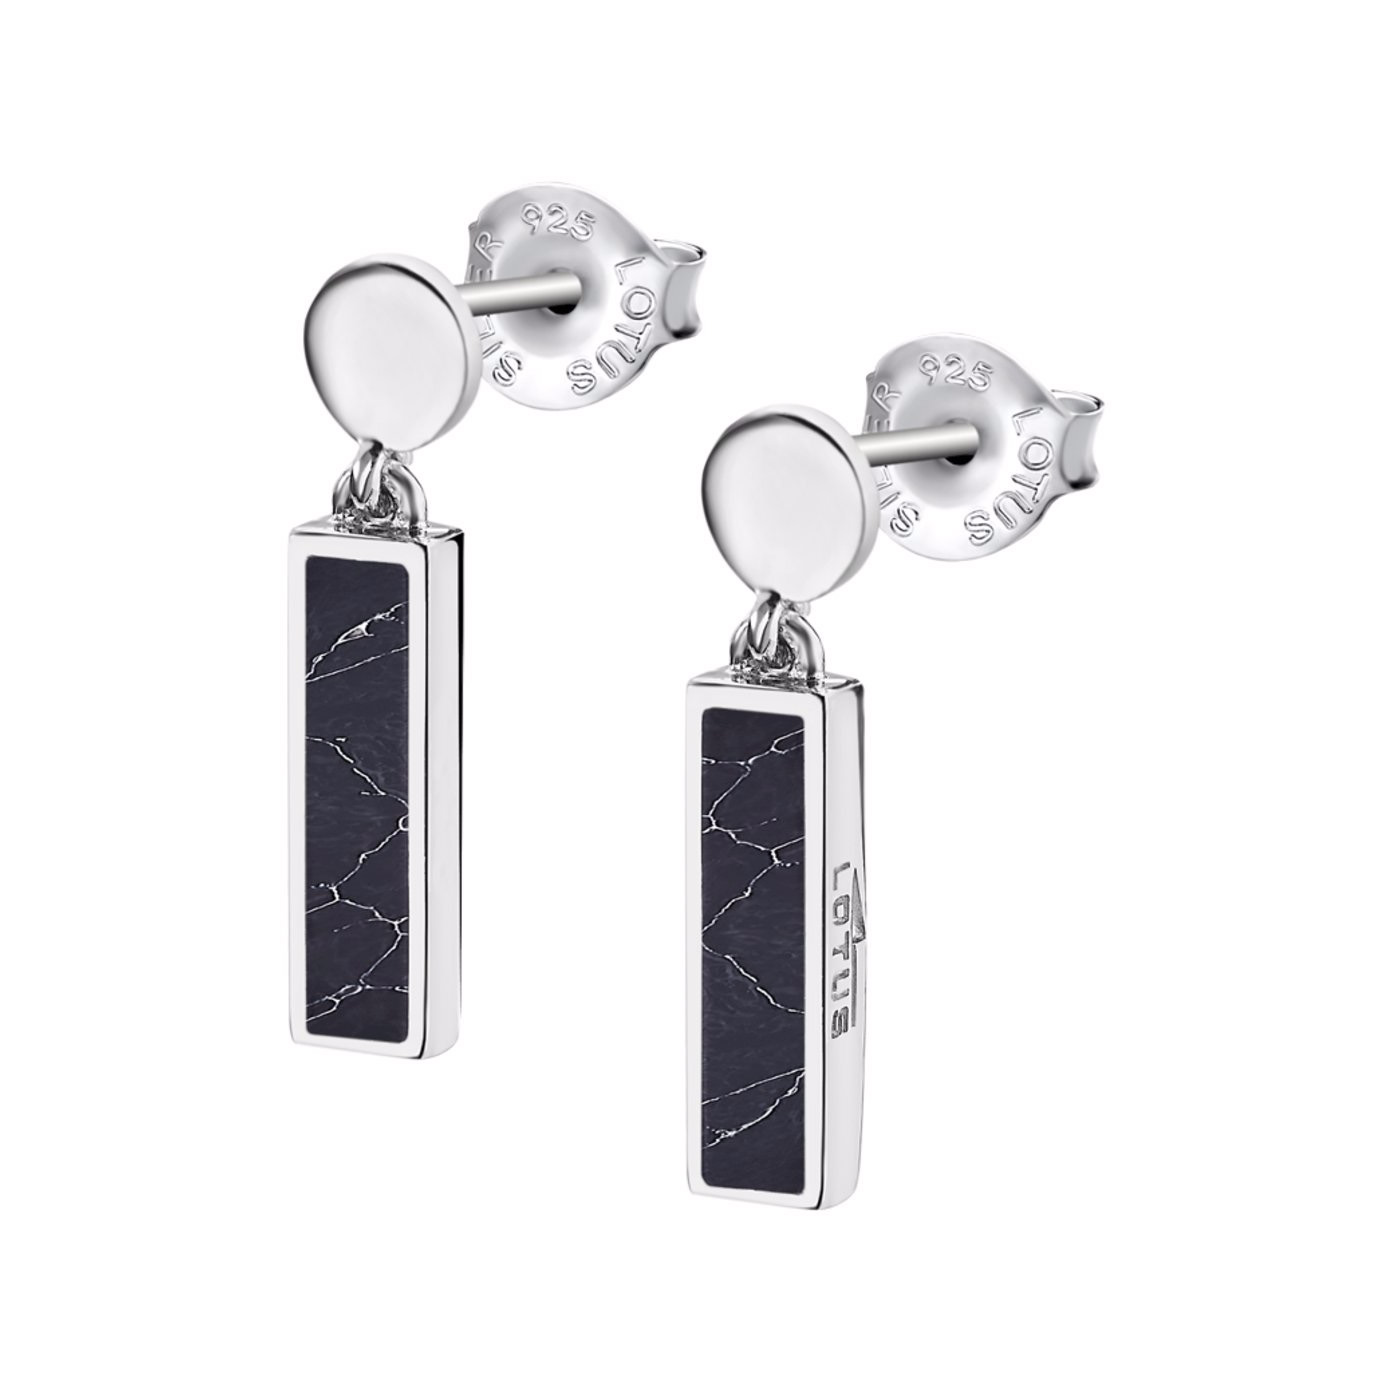 Custom design OEM/ODM smykker sterling sølv øreringe til damer